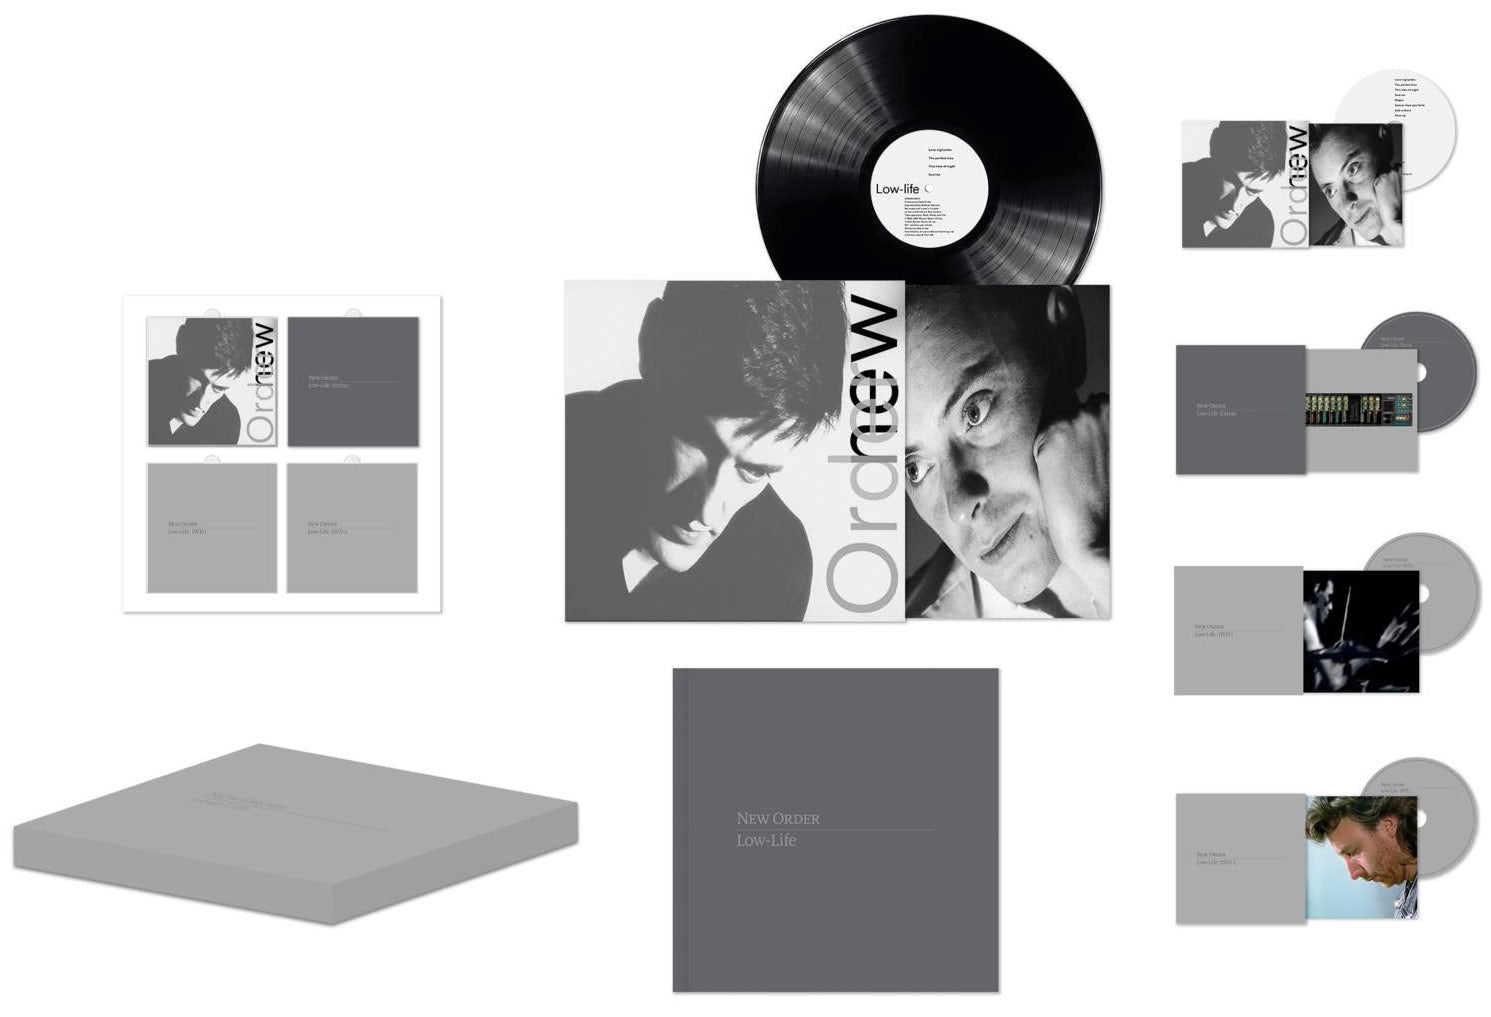 NEW ORDER - Low-Life - Definitive Edition - LP (180 Vinyl) / 2CD / 2DVD / Hard Back Book - Box Set